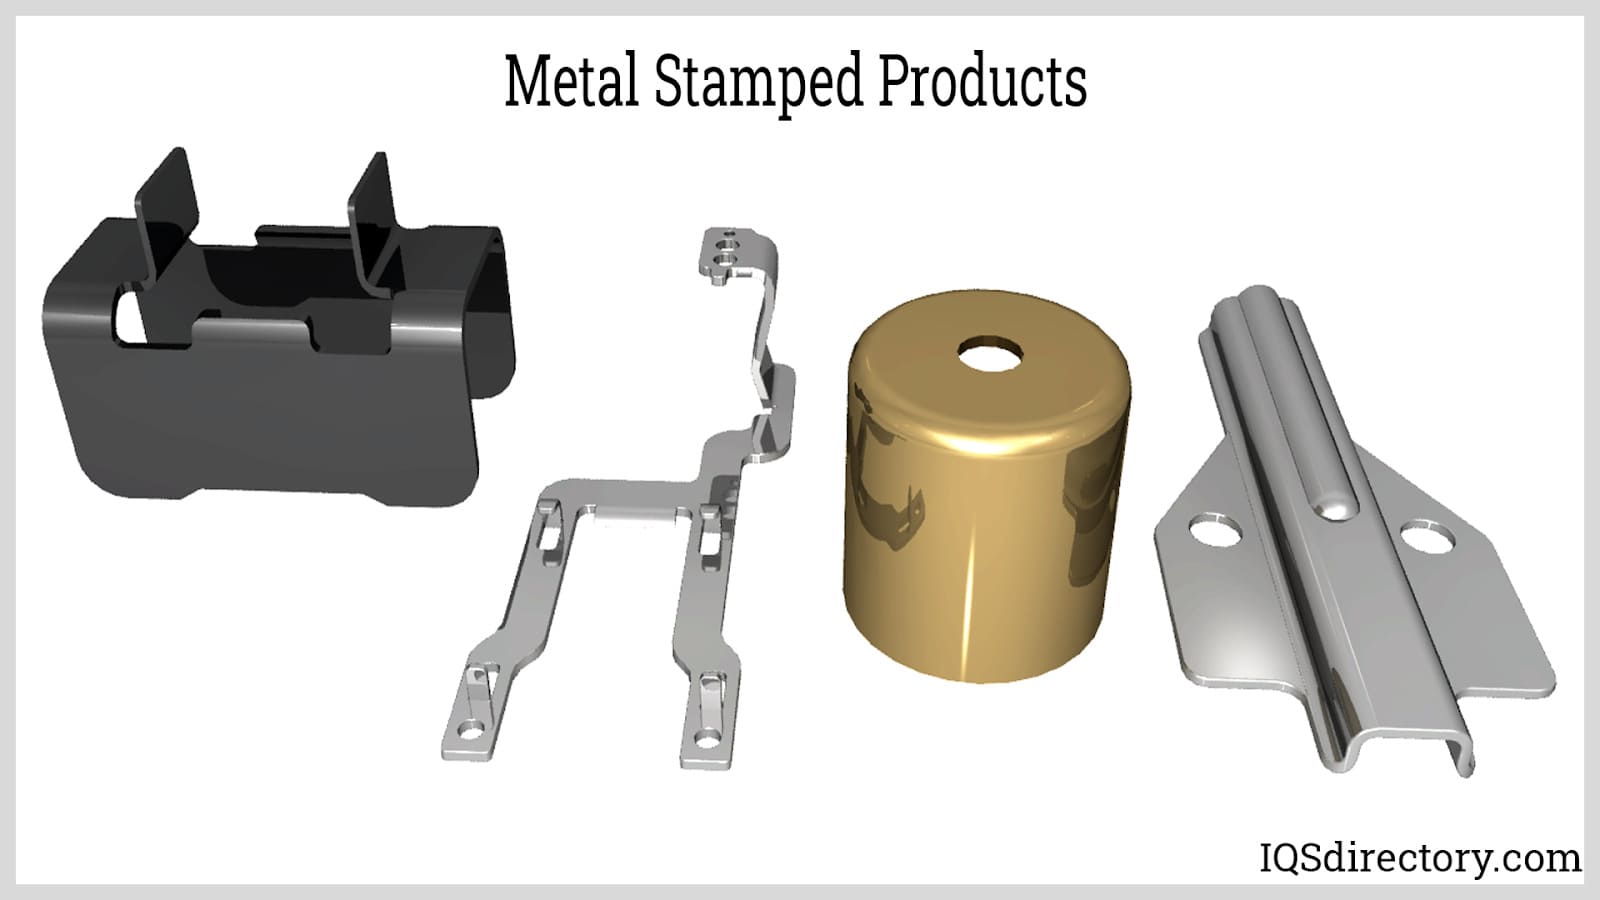 Maker Tool - Metal Stamping Base & Guide